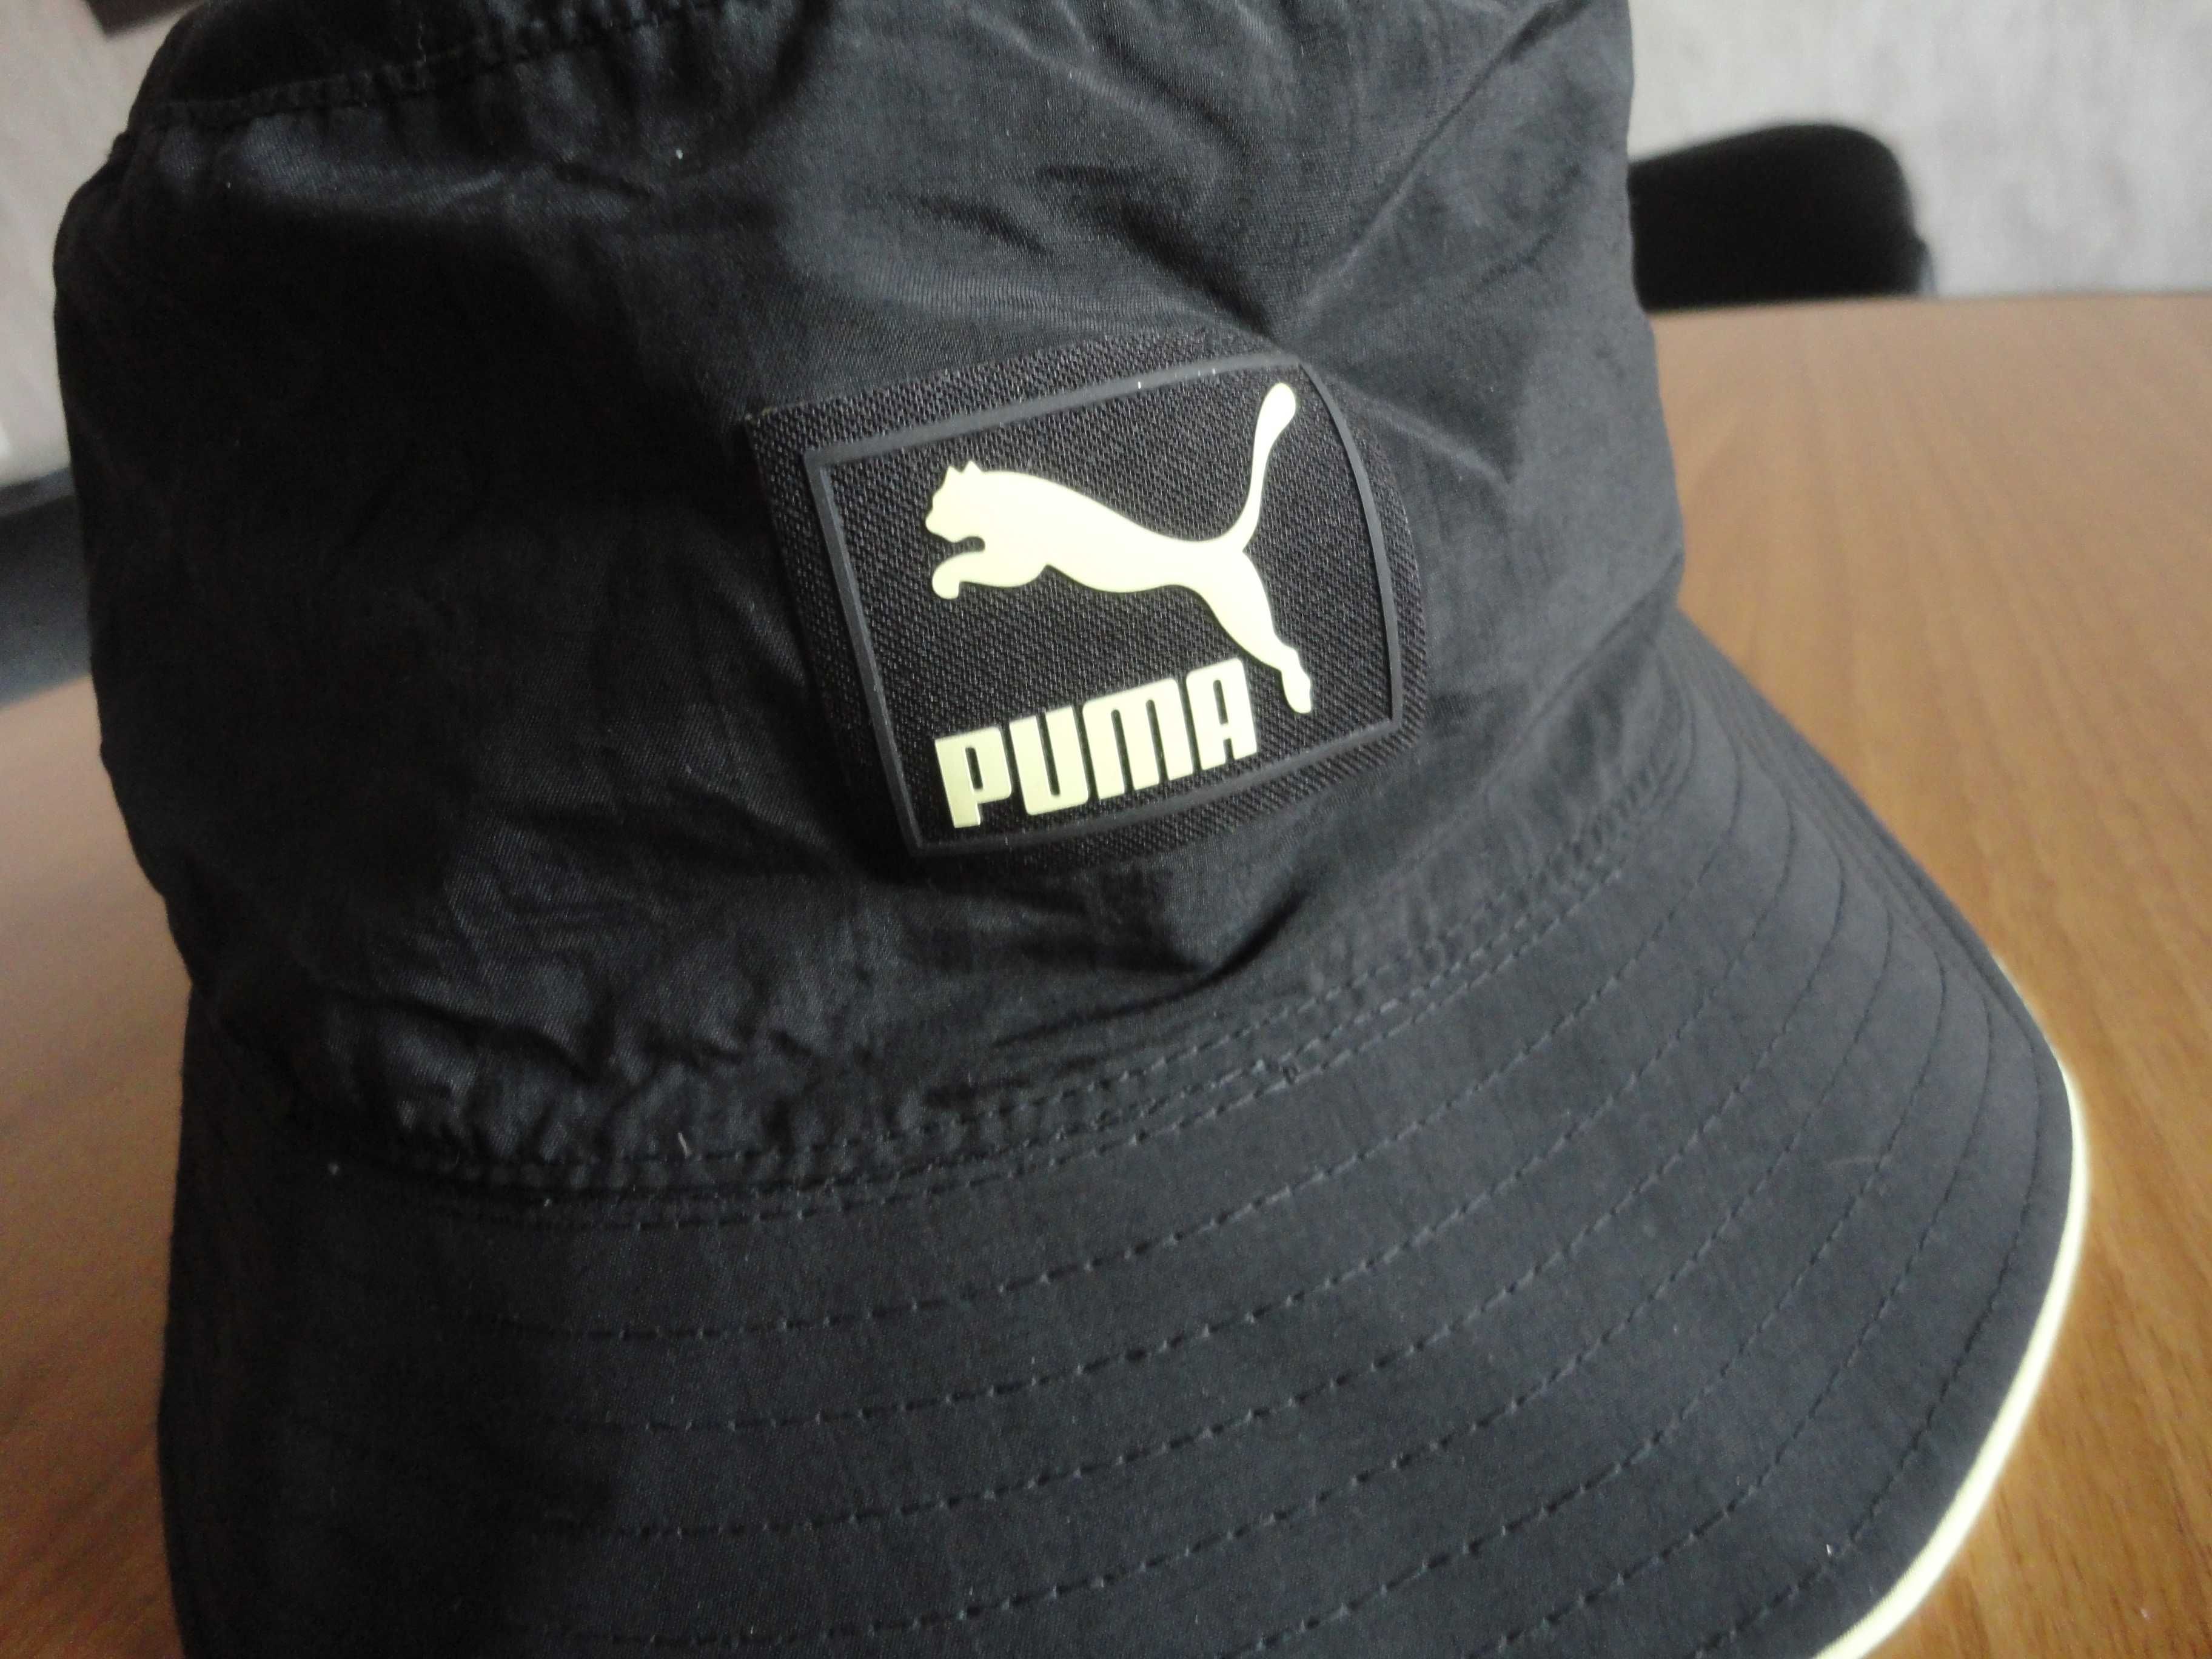 Puma/L-XL/нова шапка идиотка